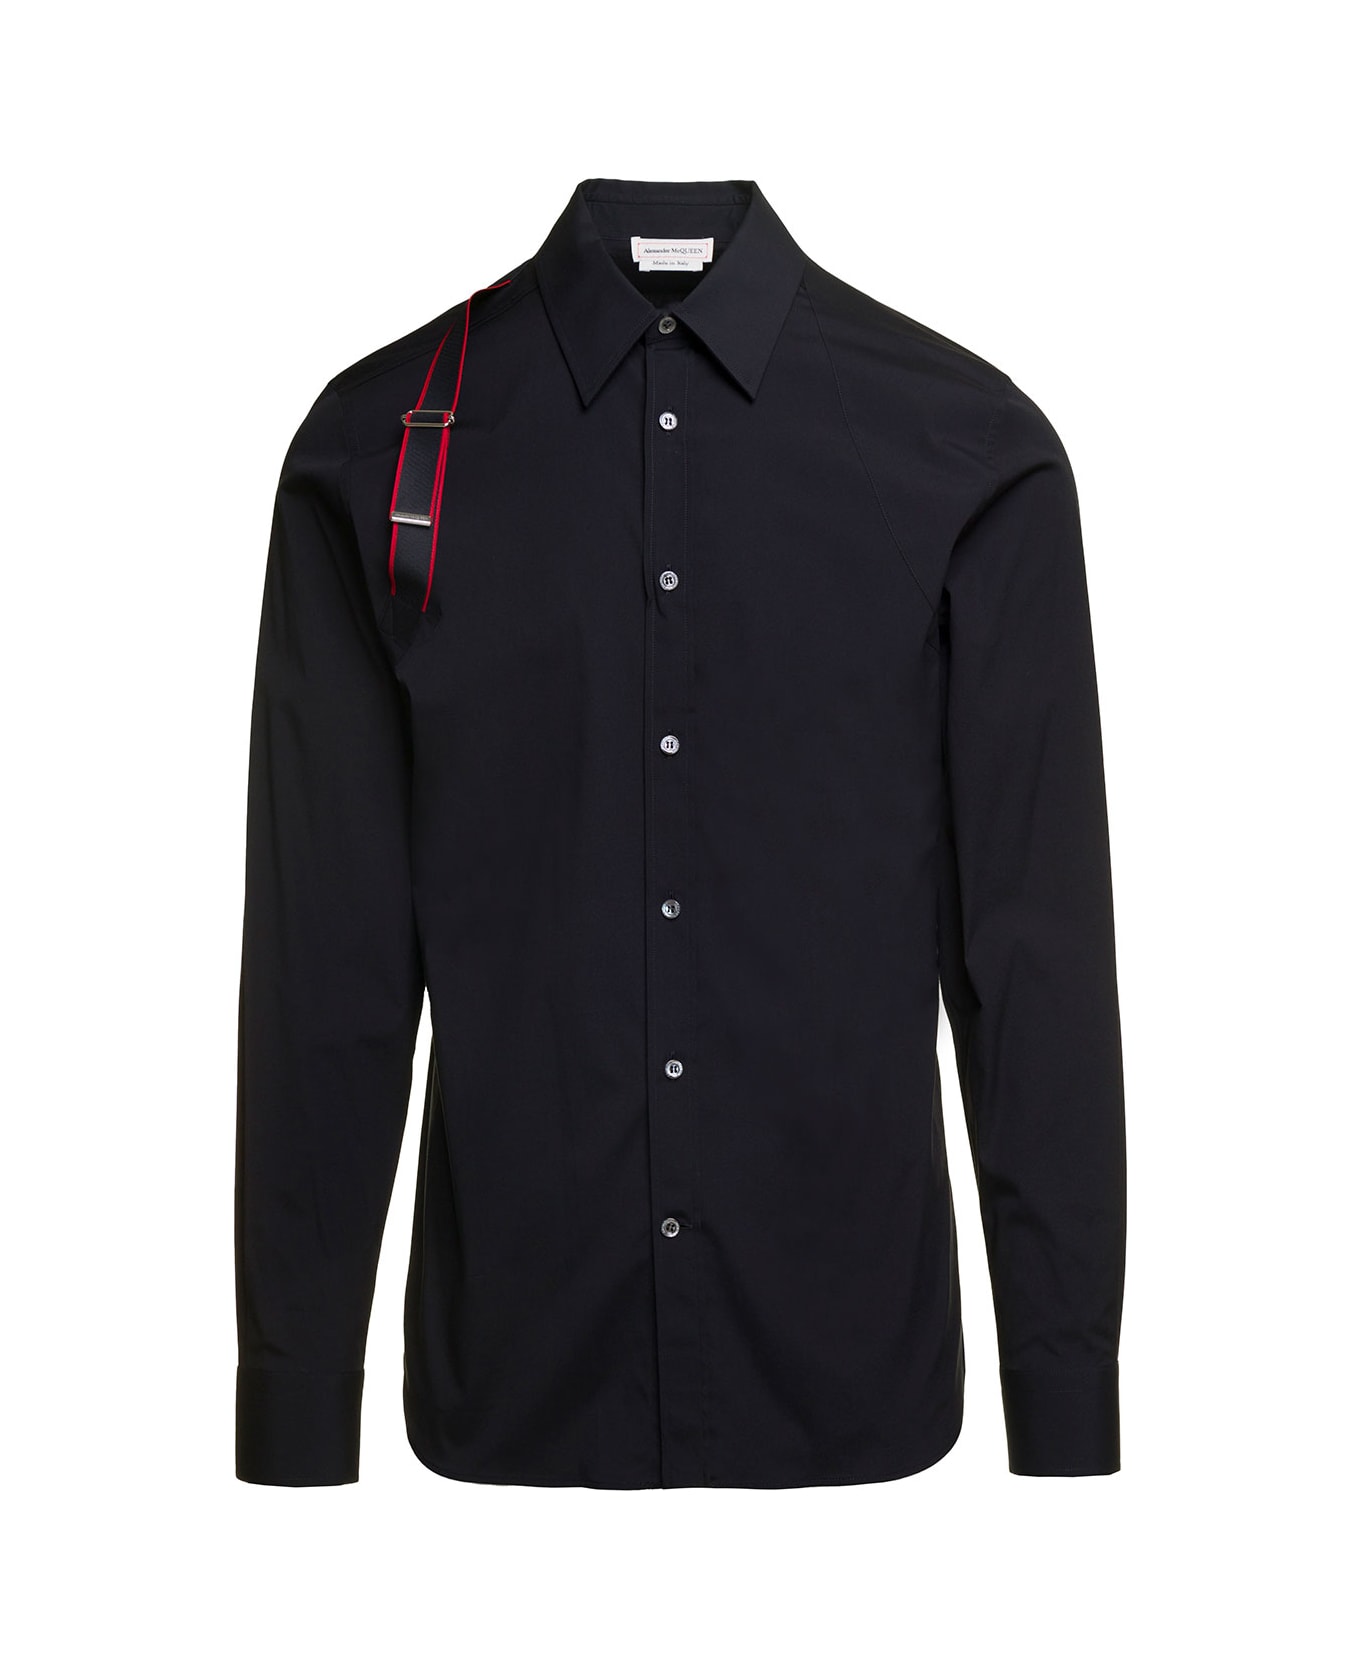 Alexander McQueen Black Shirt With Harness Detail In Stretch Cotton Man - Black